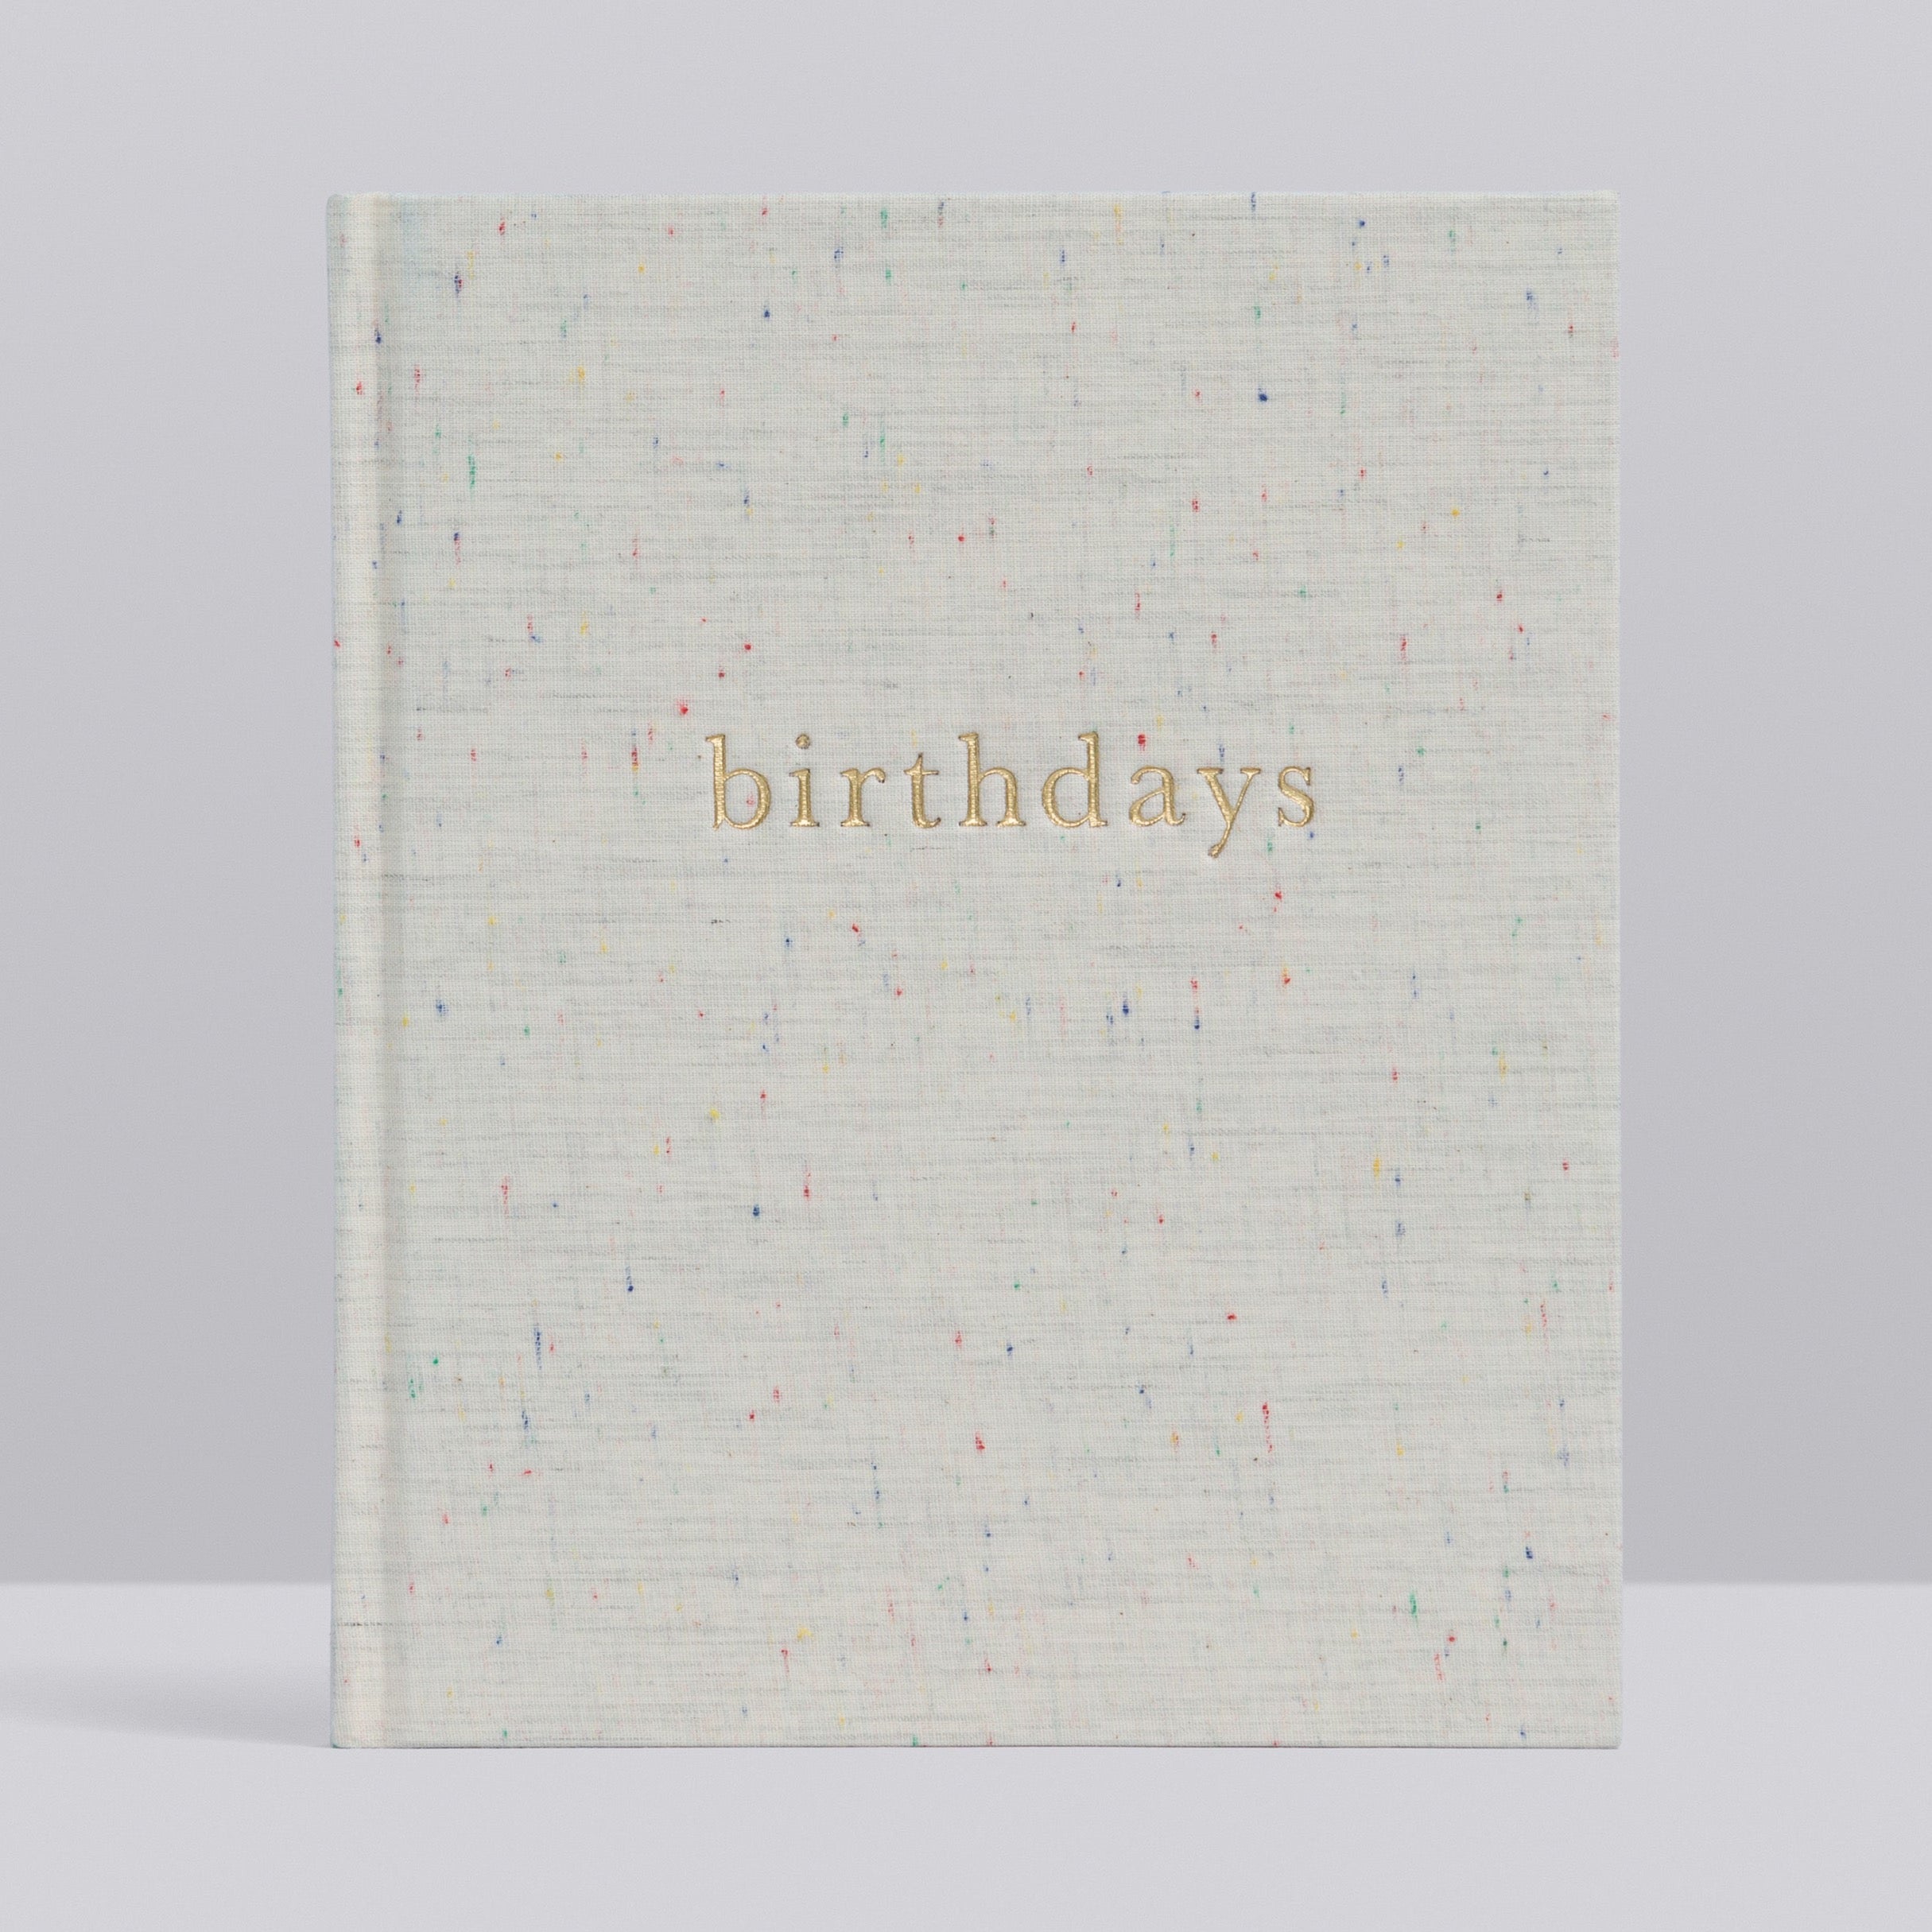 Write to Me | Birthdays. Birthday Memories - Journal